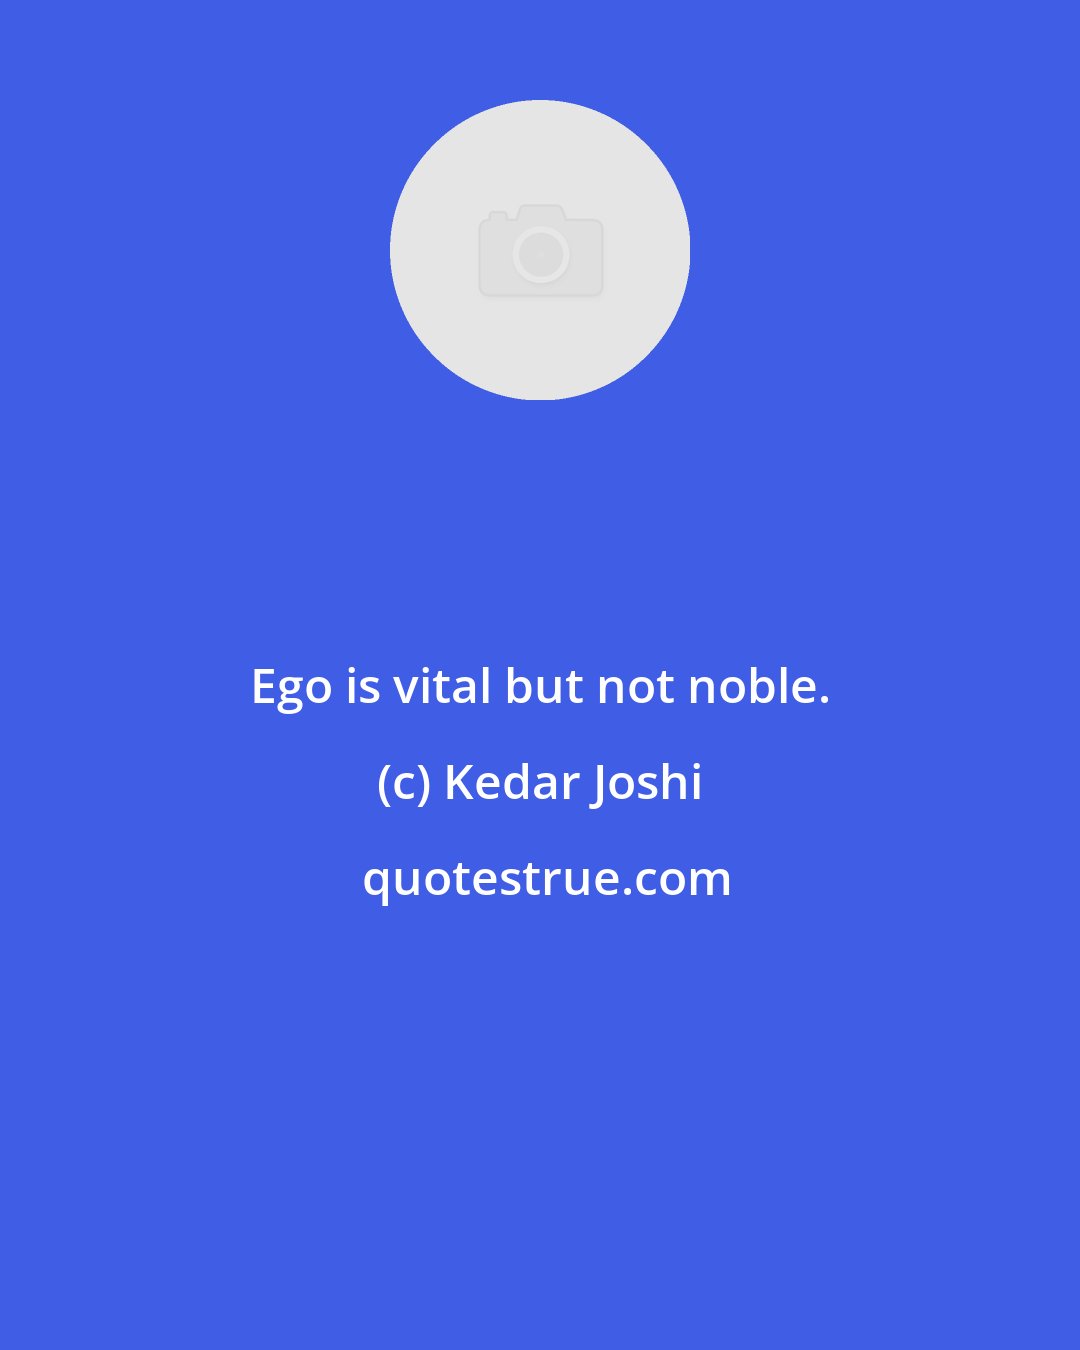 Kedar Joshi: Ego is vital but not noble.